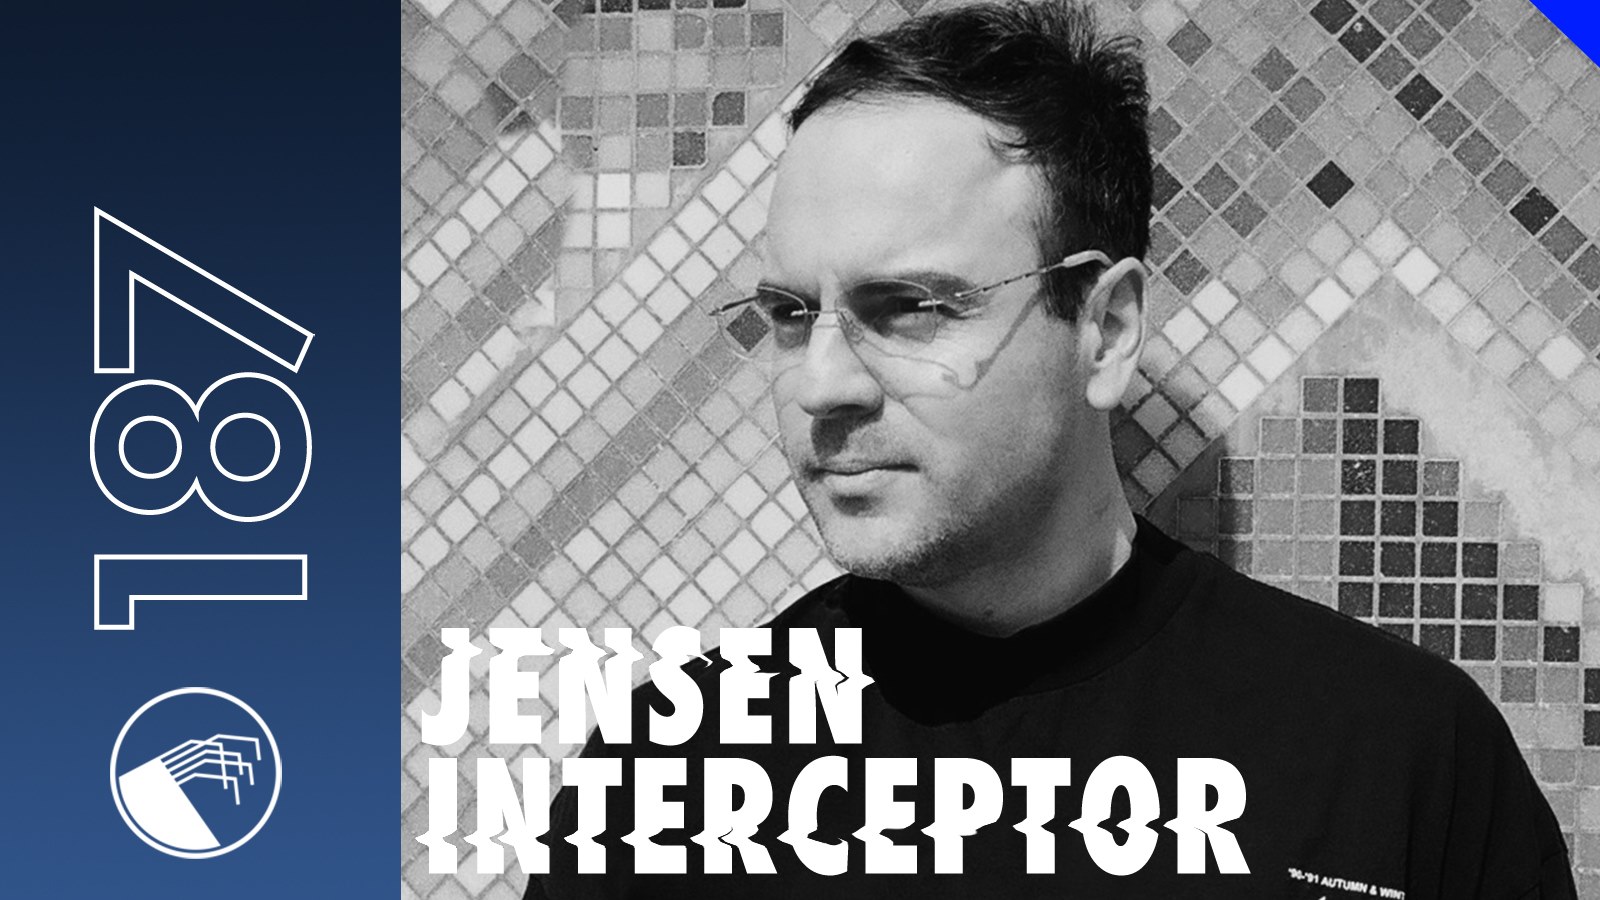 187 Jensen Interceptor